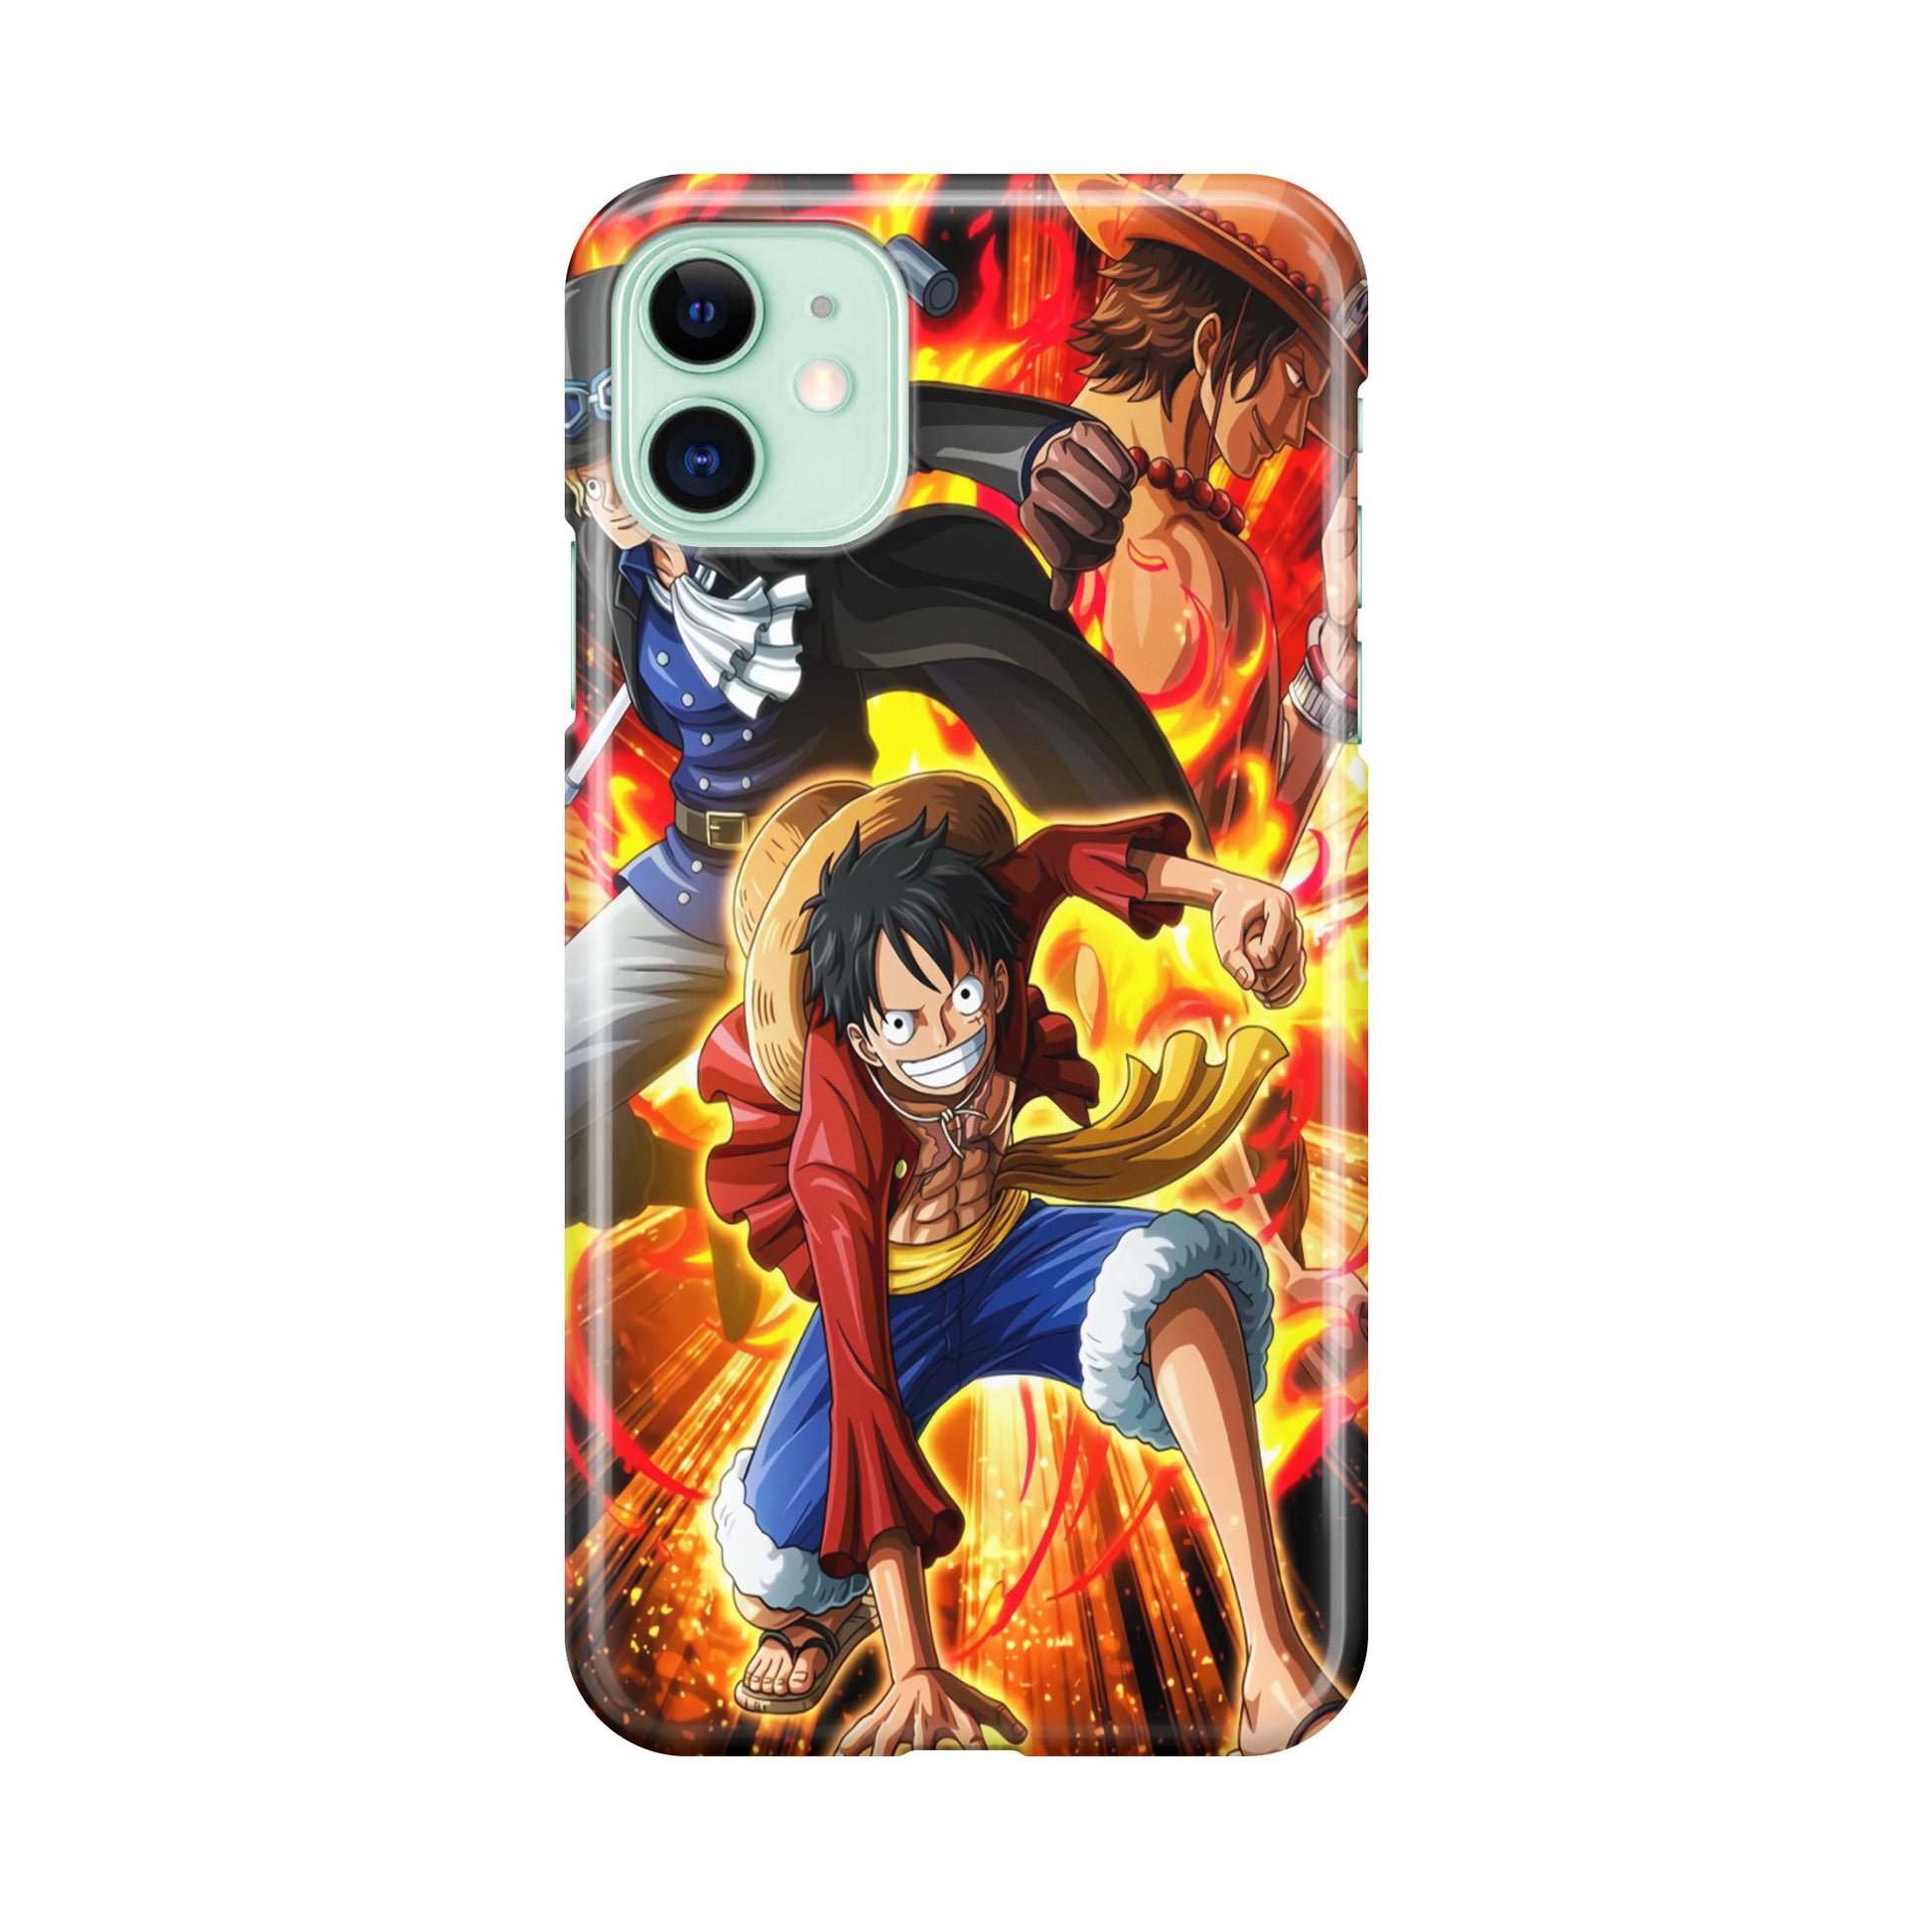 Ace Sabo Luffy Brotherhood iPhone 12 mini Case